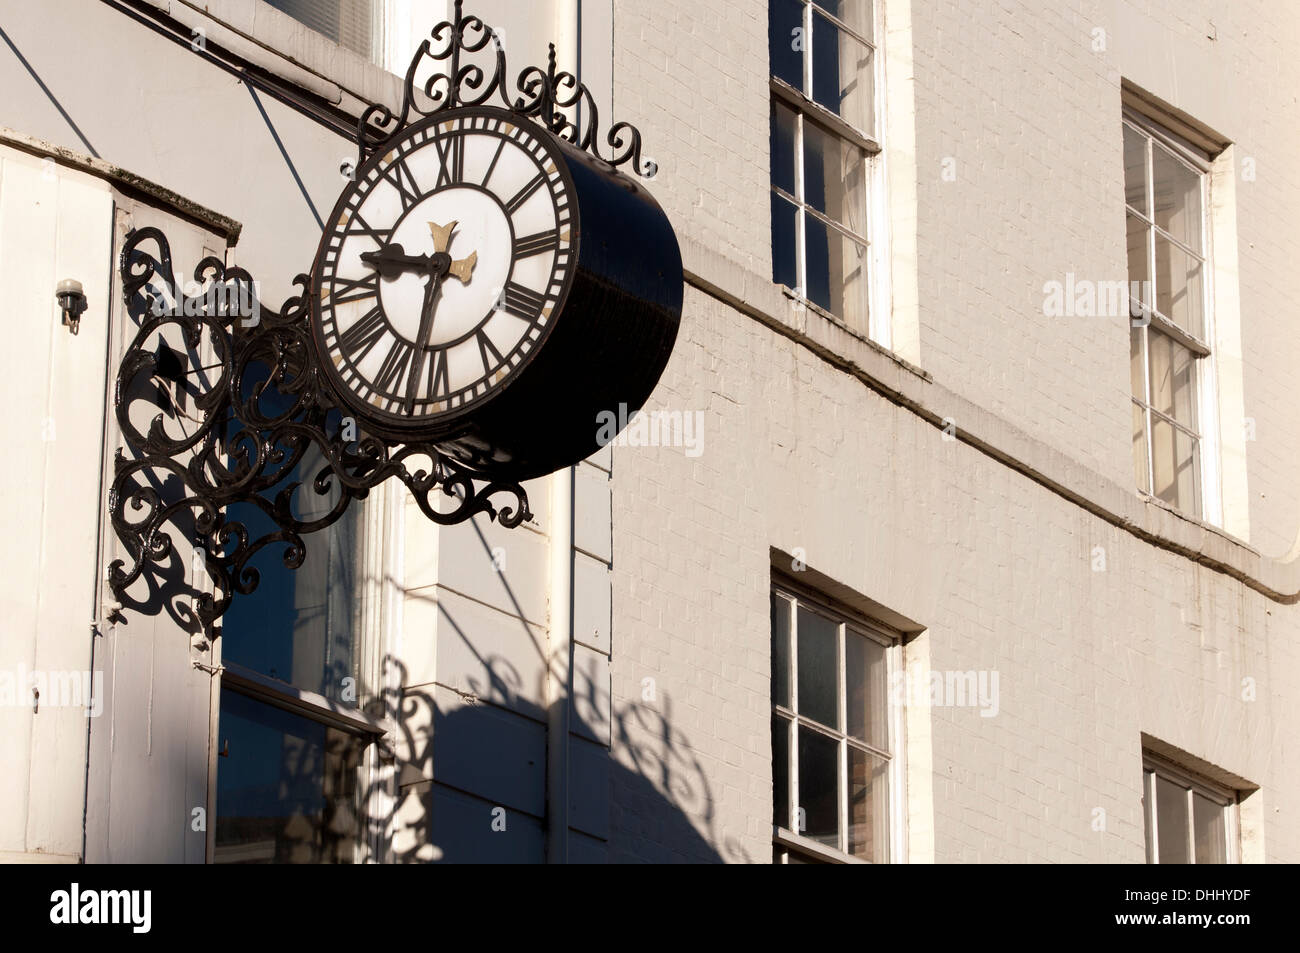 A clock in the Parade, Leamington Spa, Warwickshire, UK Stock Photo